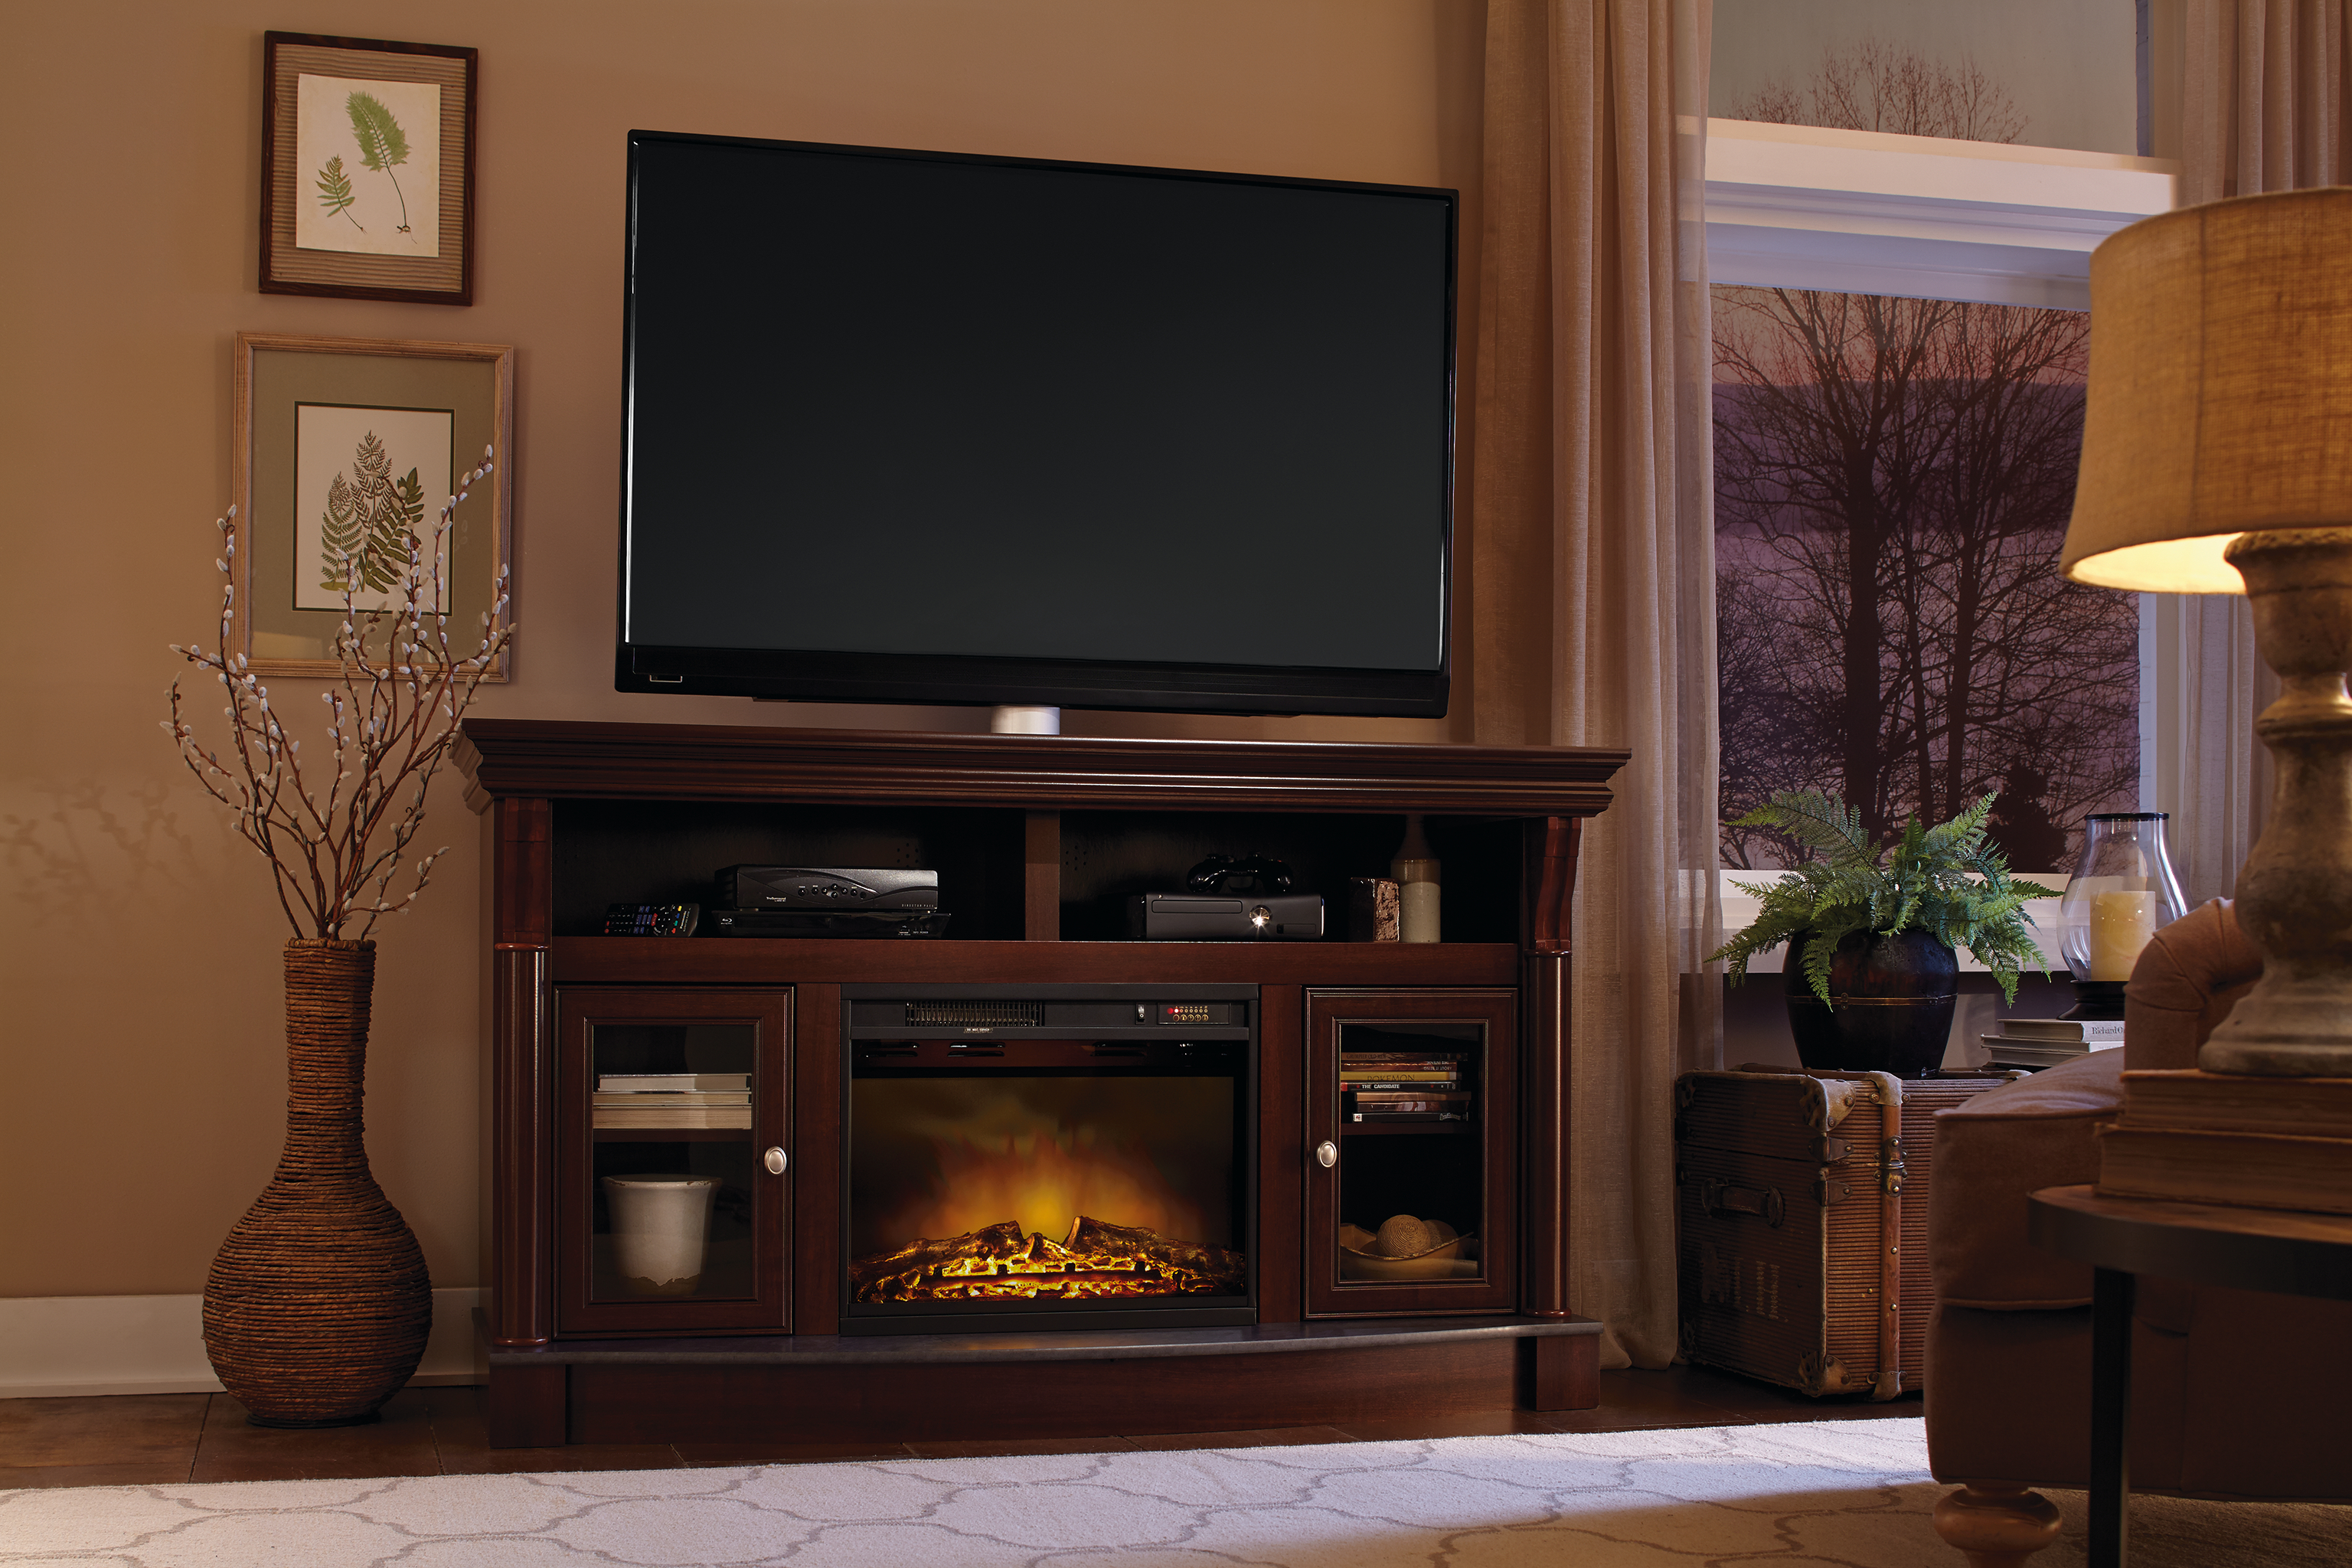 Sauder Tv Stand with Fireplace Beautiful Sauder Palladia Electric Fireplace Medium Console